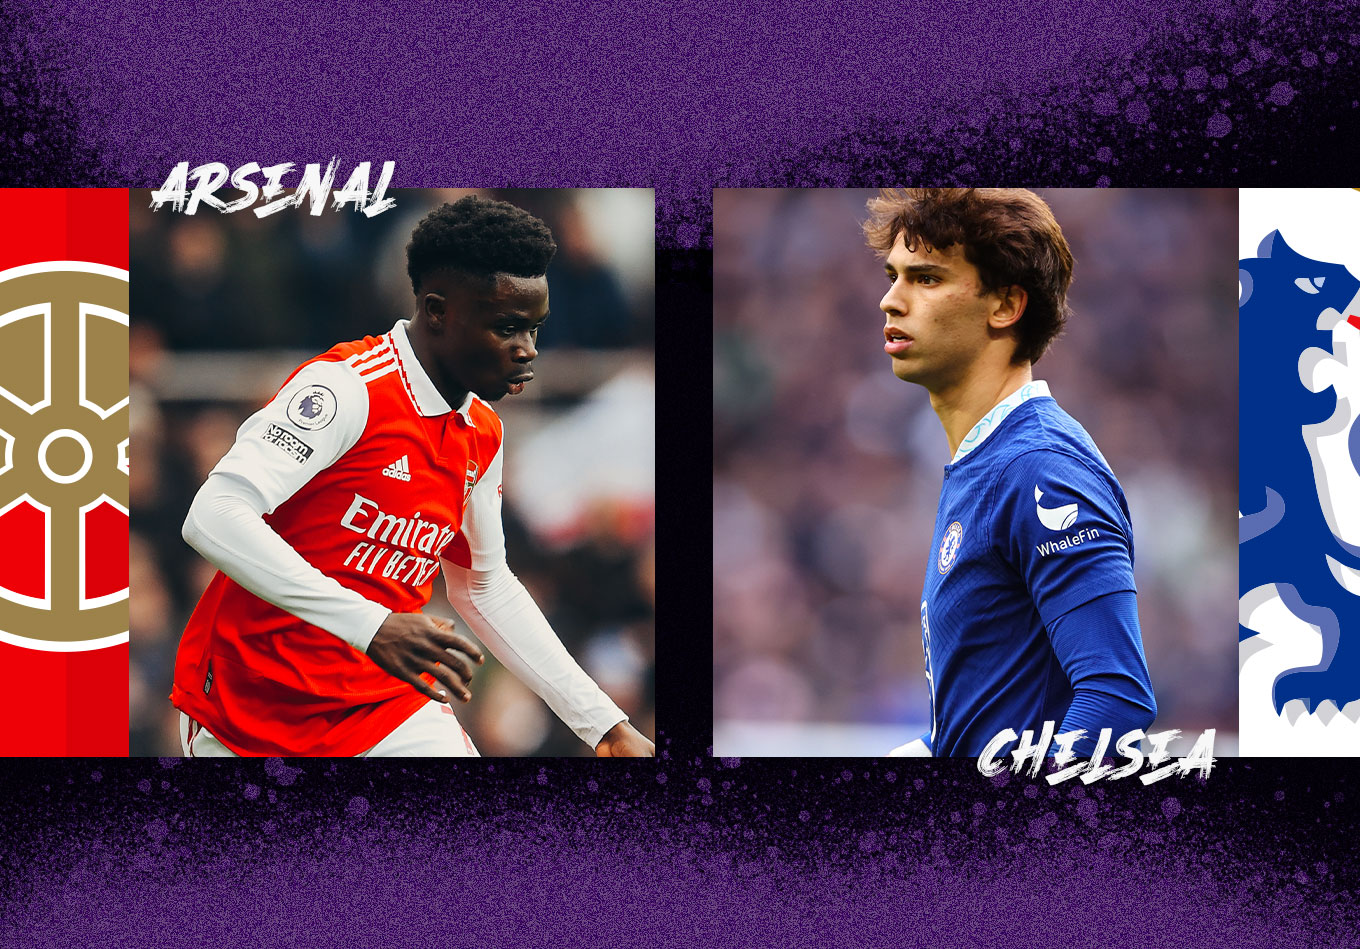 Arsenal vs Chelsea: Prediction and Stats